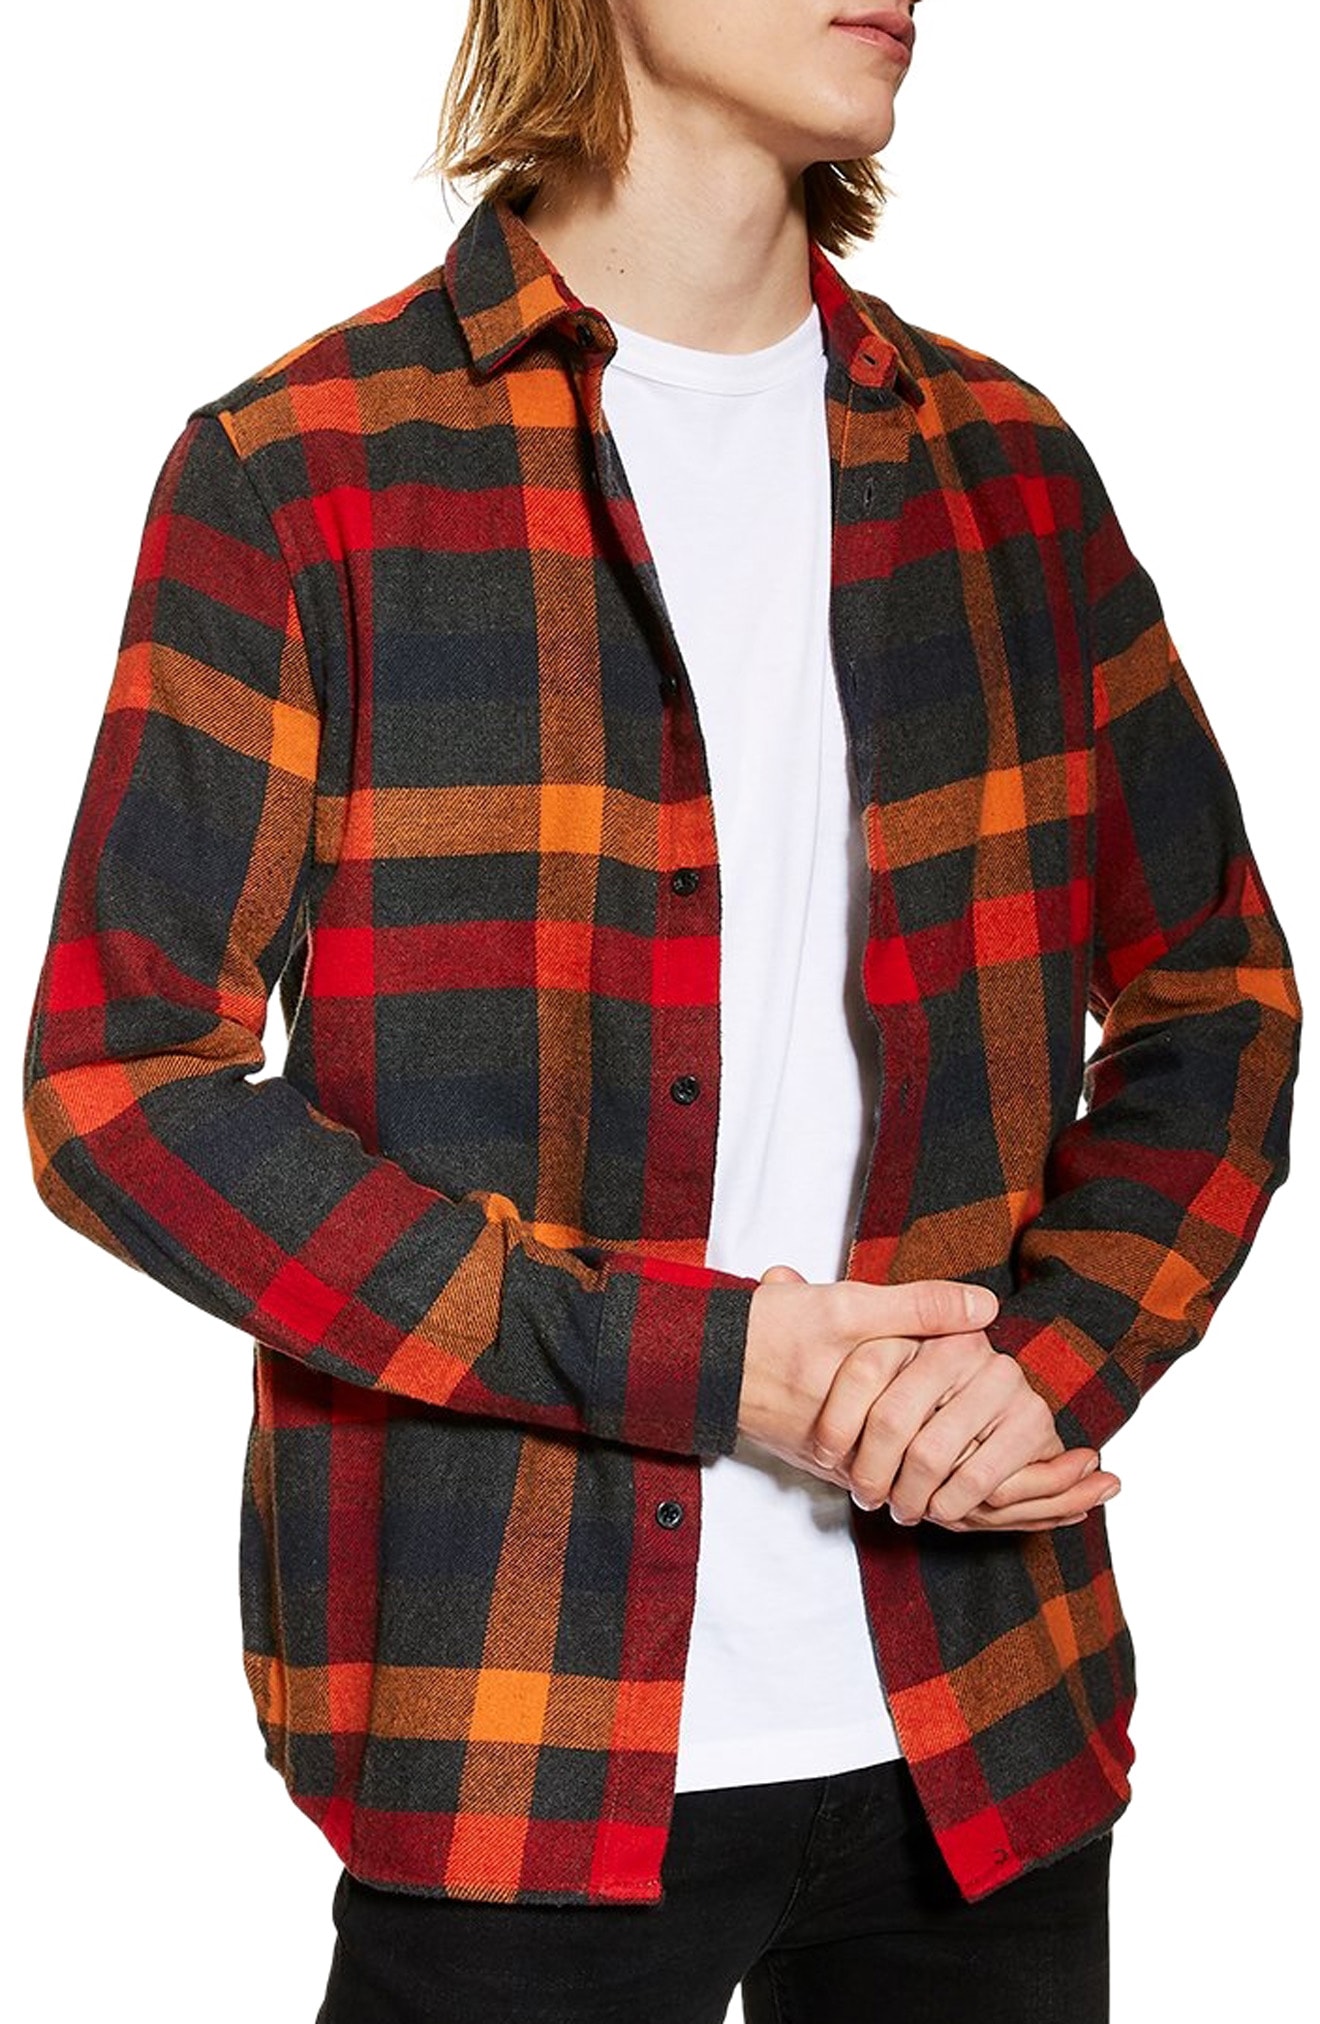 Men's Flannel Shirts | Nordstrom